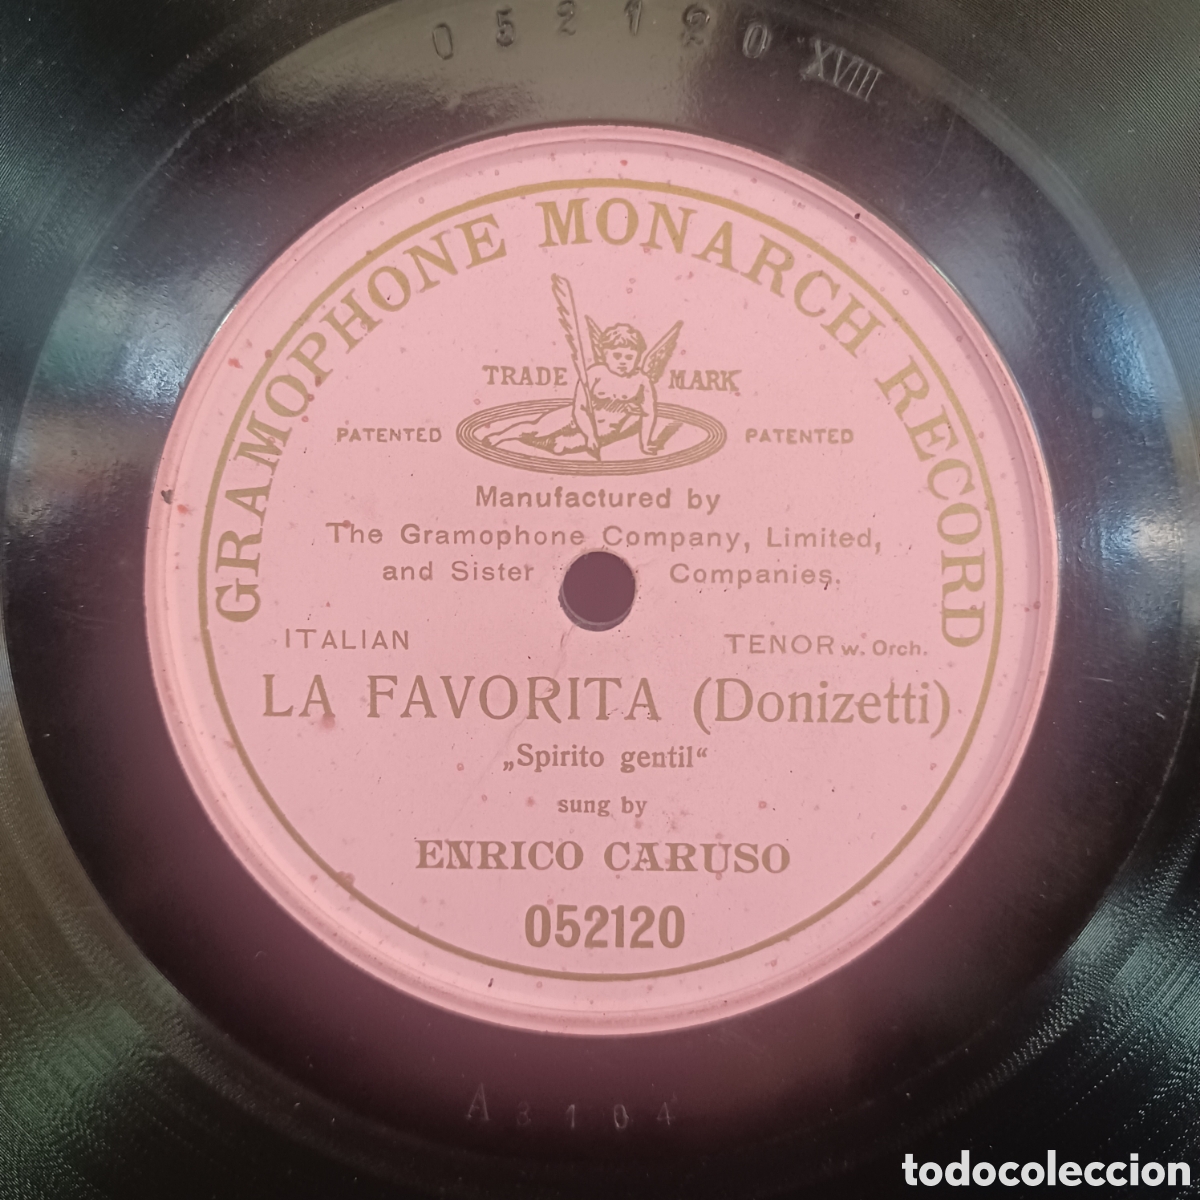 la favorita / enrico caruso - gramophone monarc - Buy Shellac records of  Classical Music